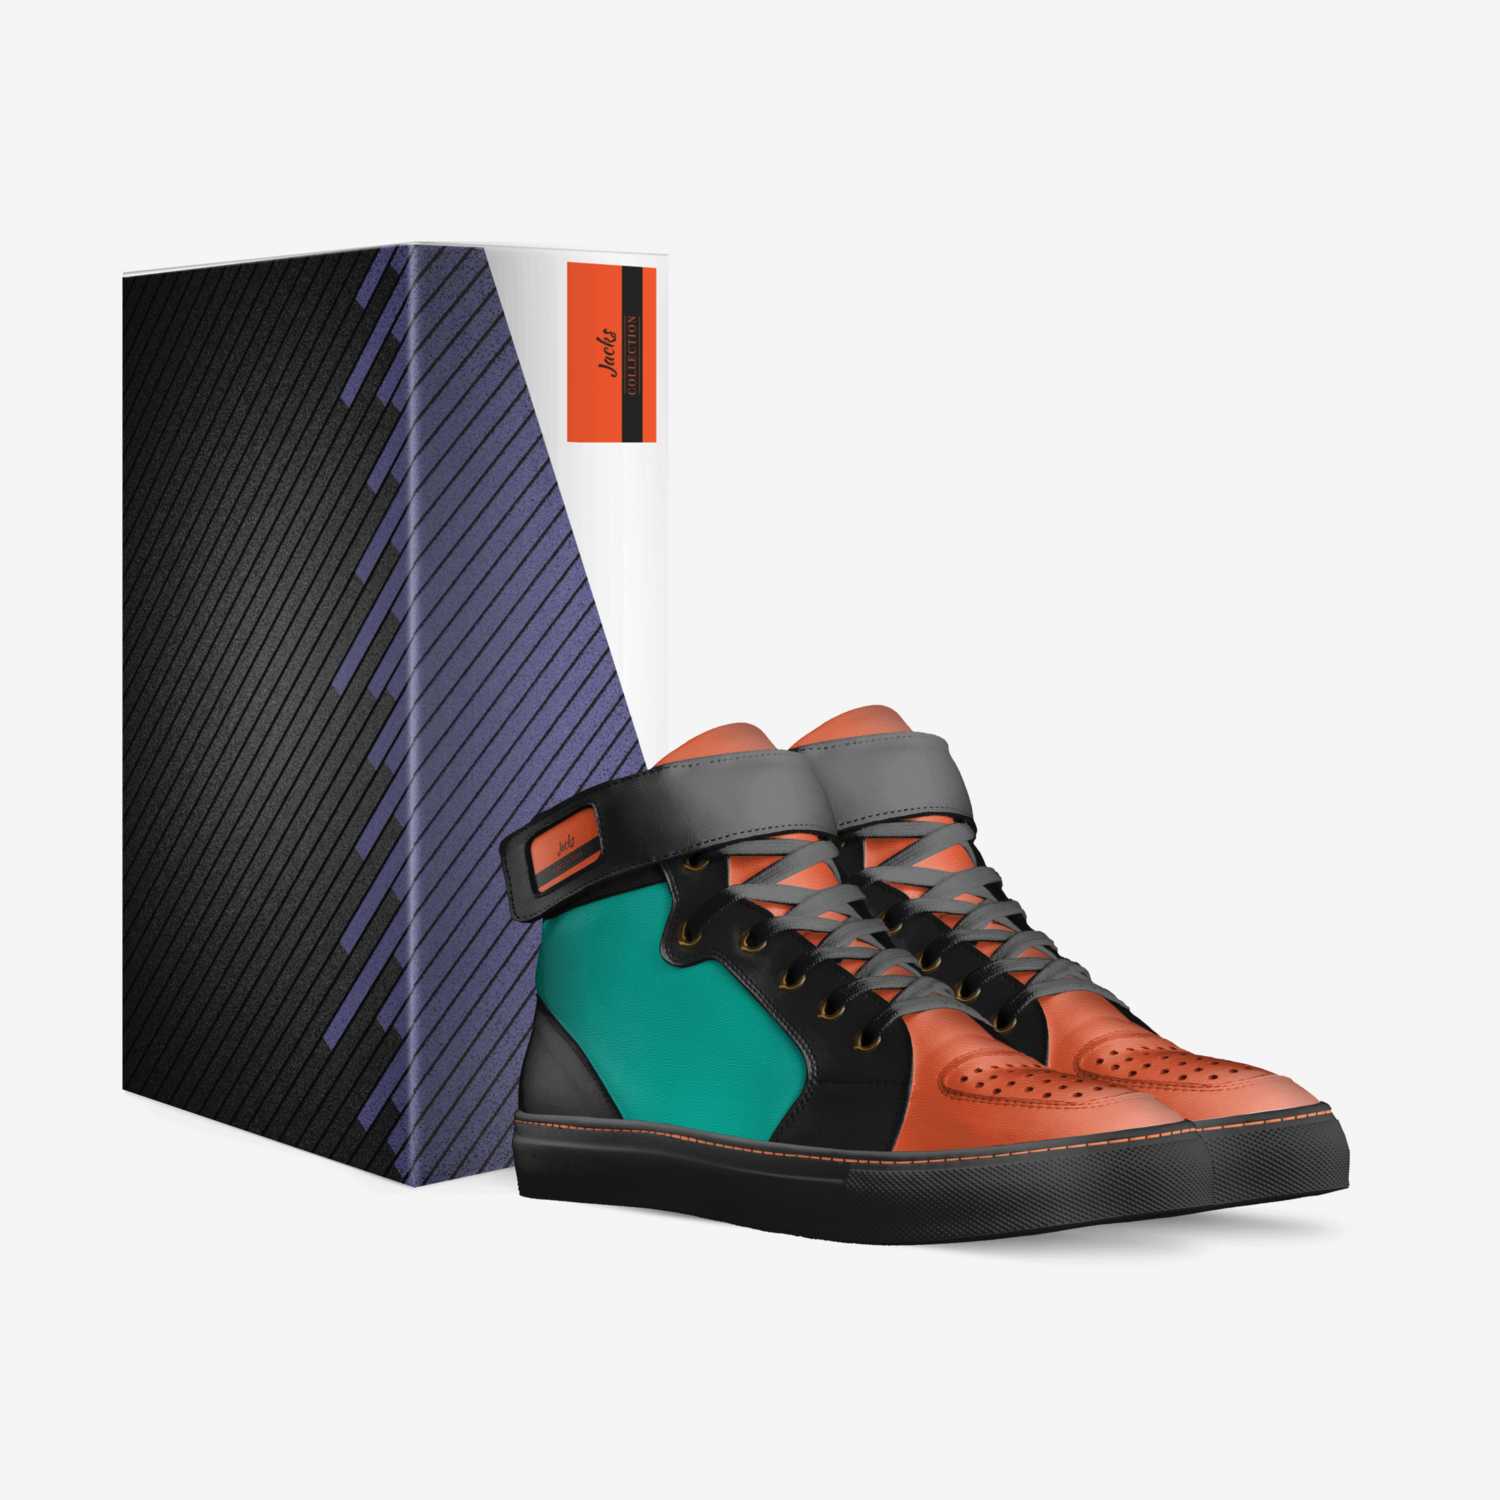 Jacks custom made in Italy shoes by Ayra Jackson | Box view